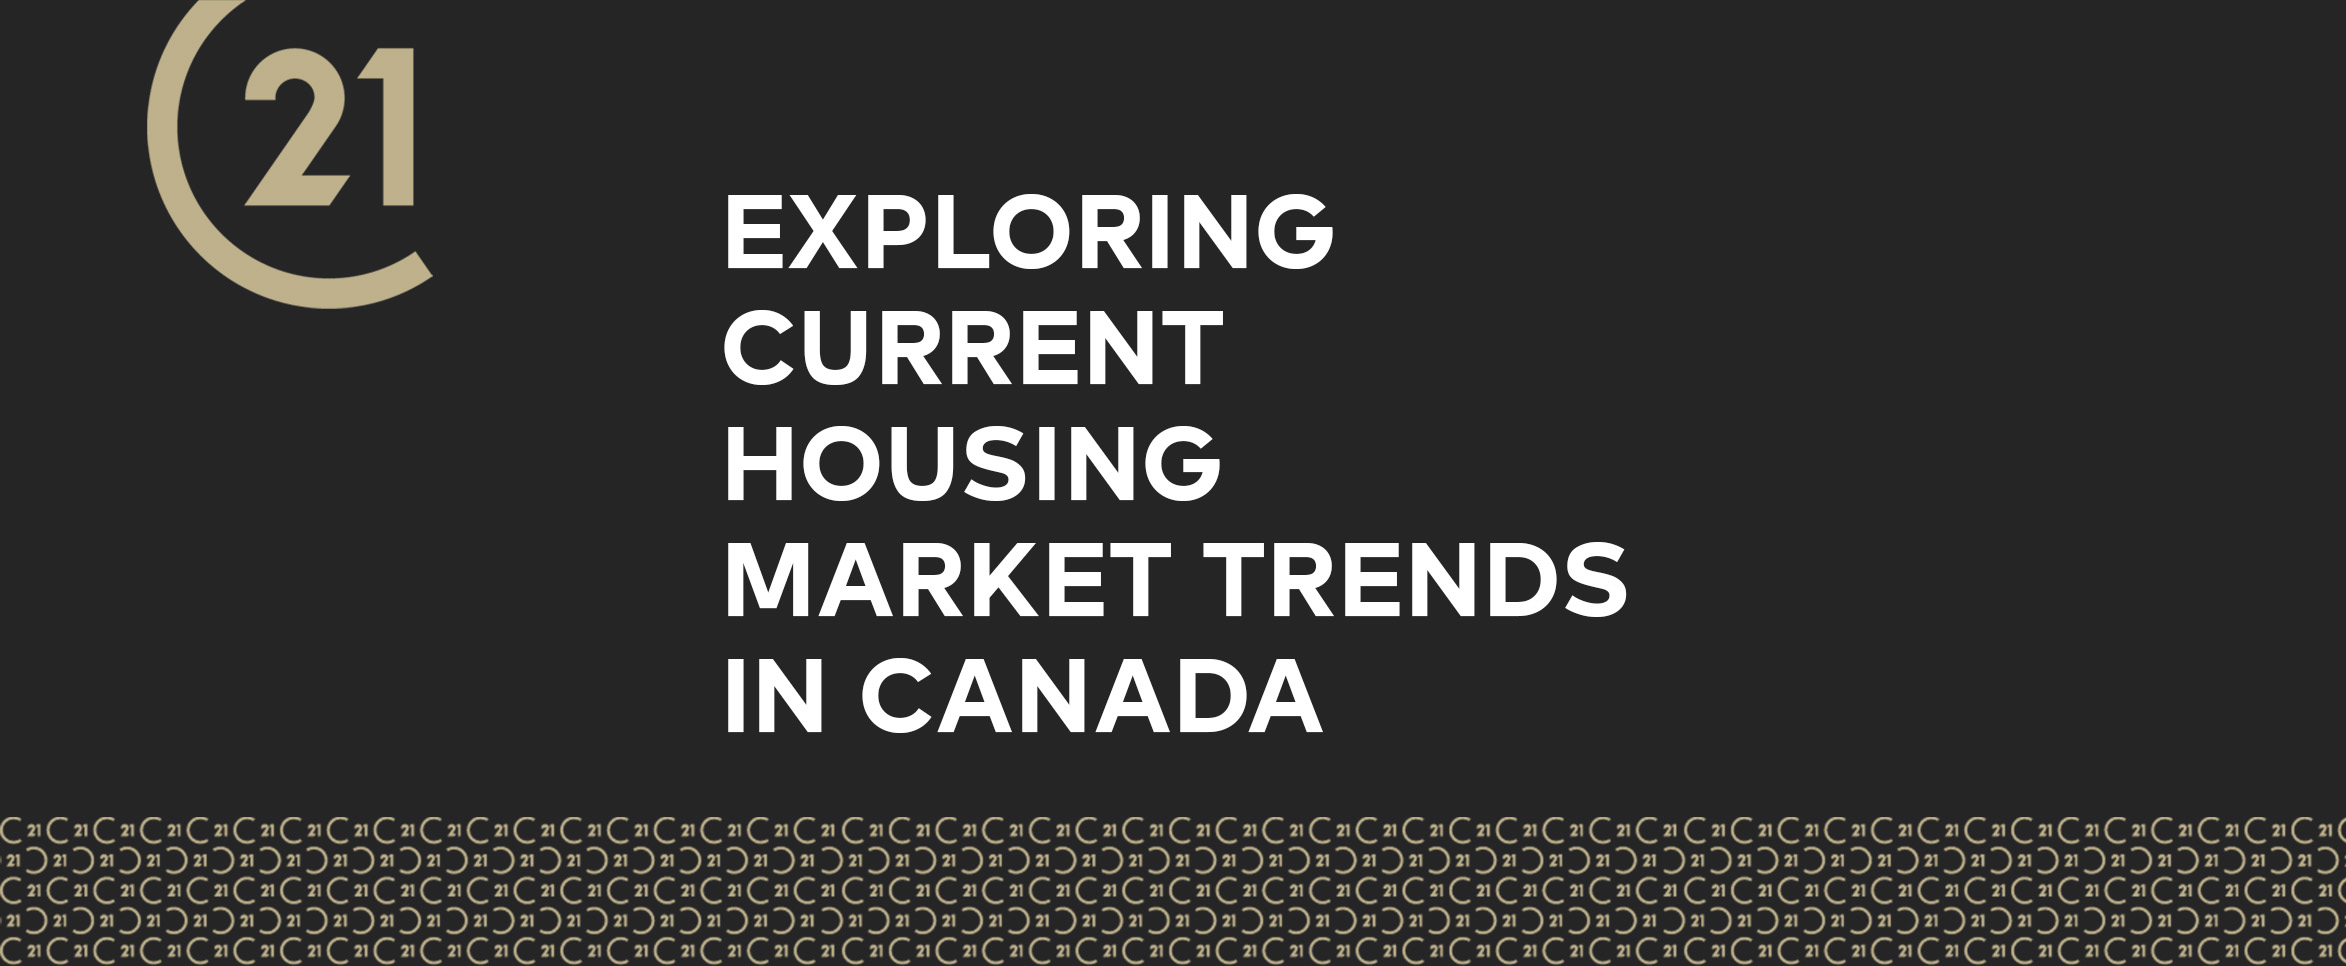 Exploring Current Housing Market Trends in Canada